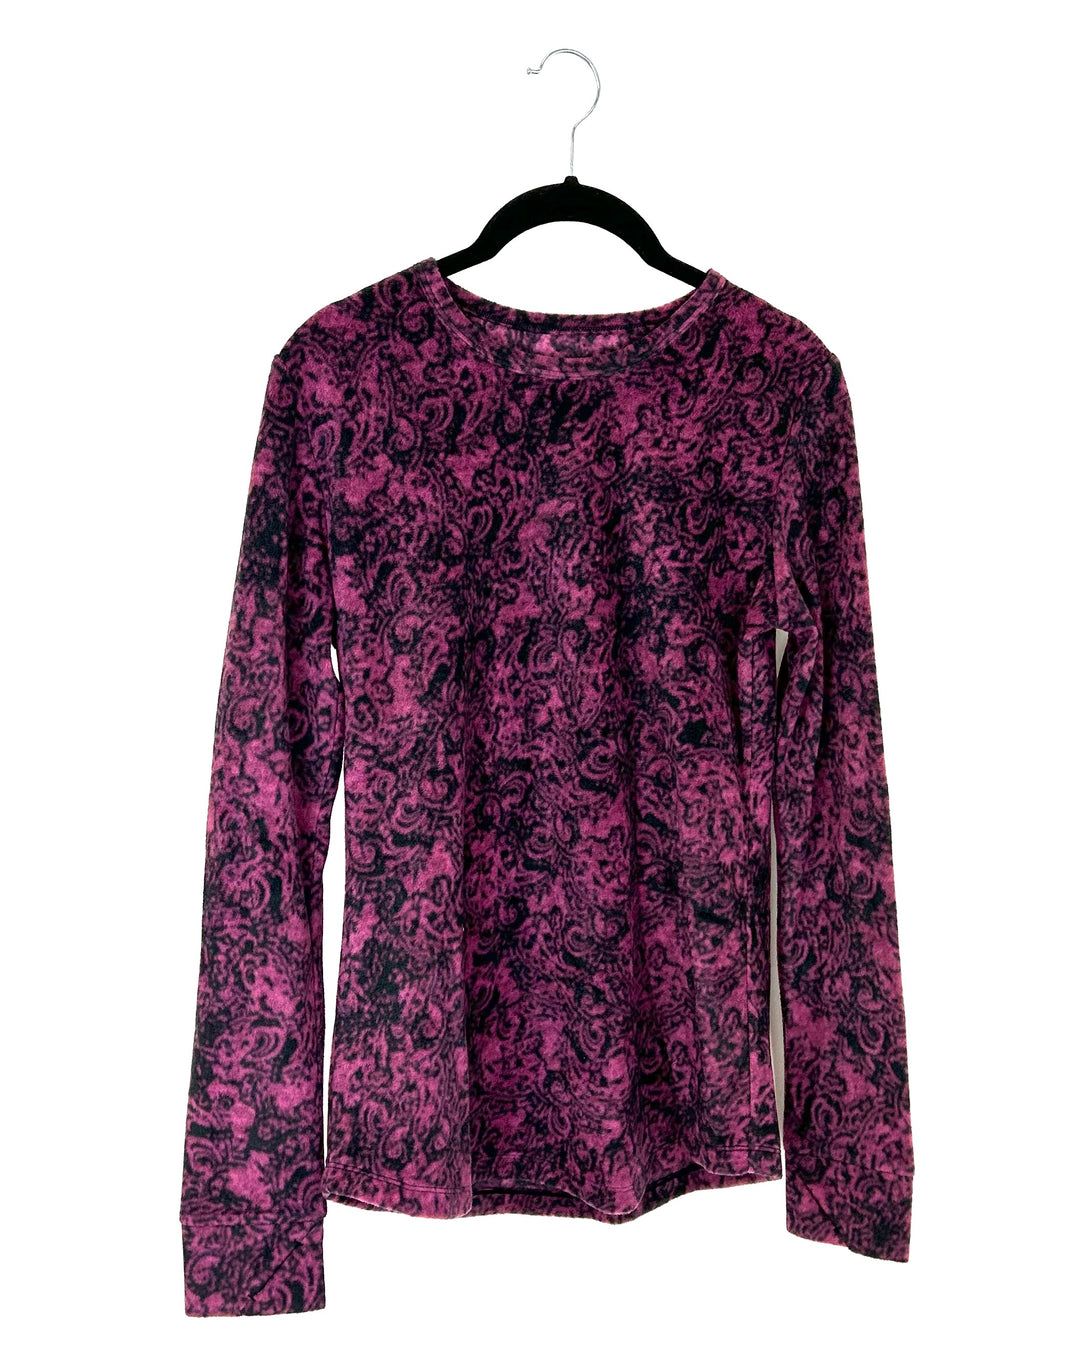 Magenta Paisley Long Sleeve Fleece Top - Size 8/10